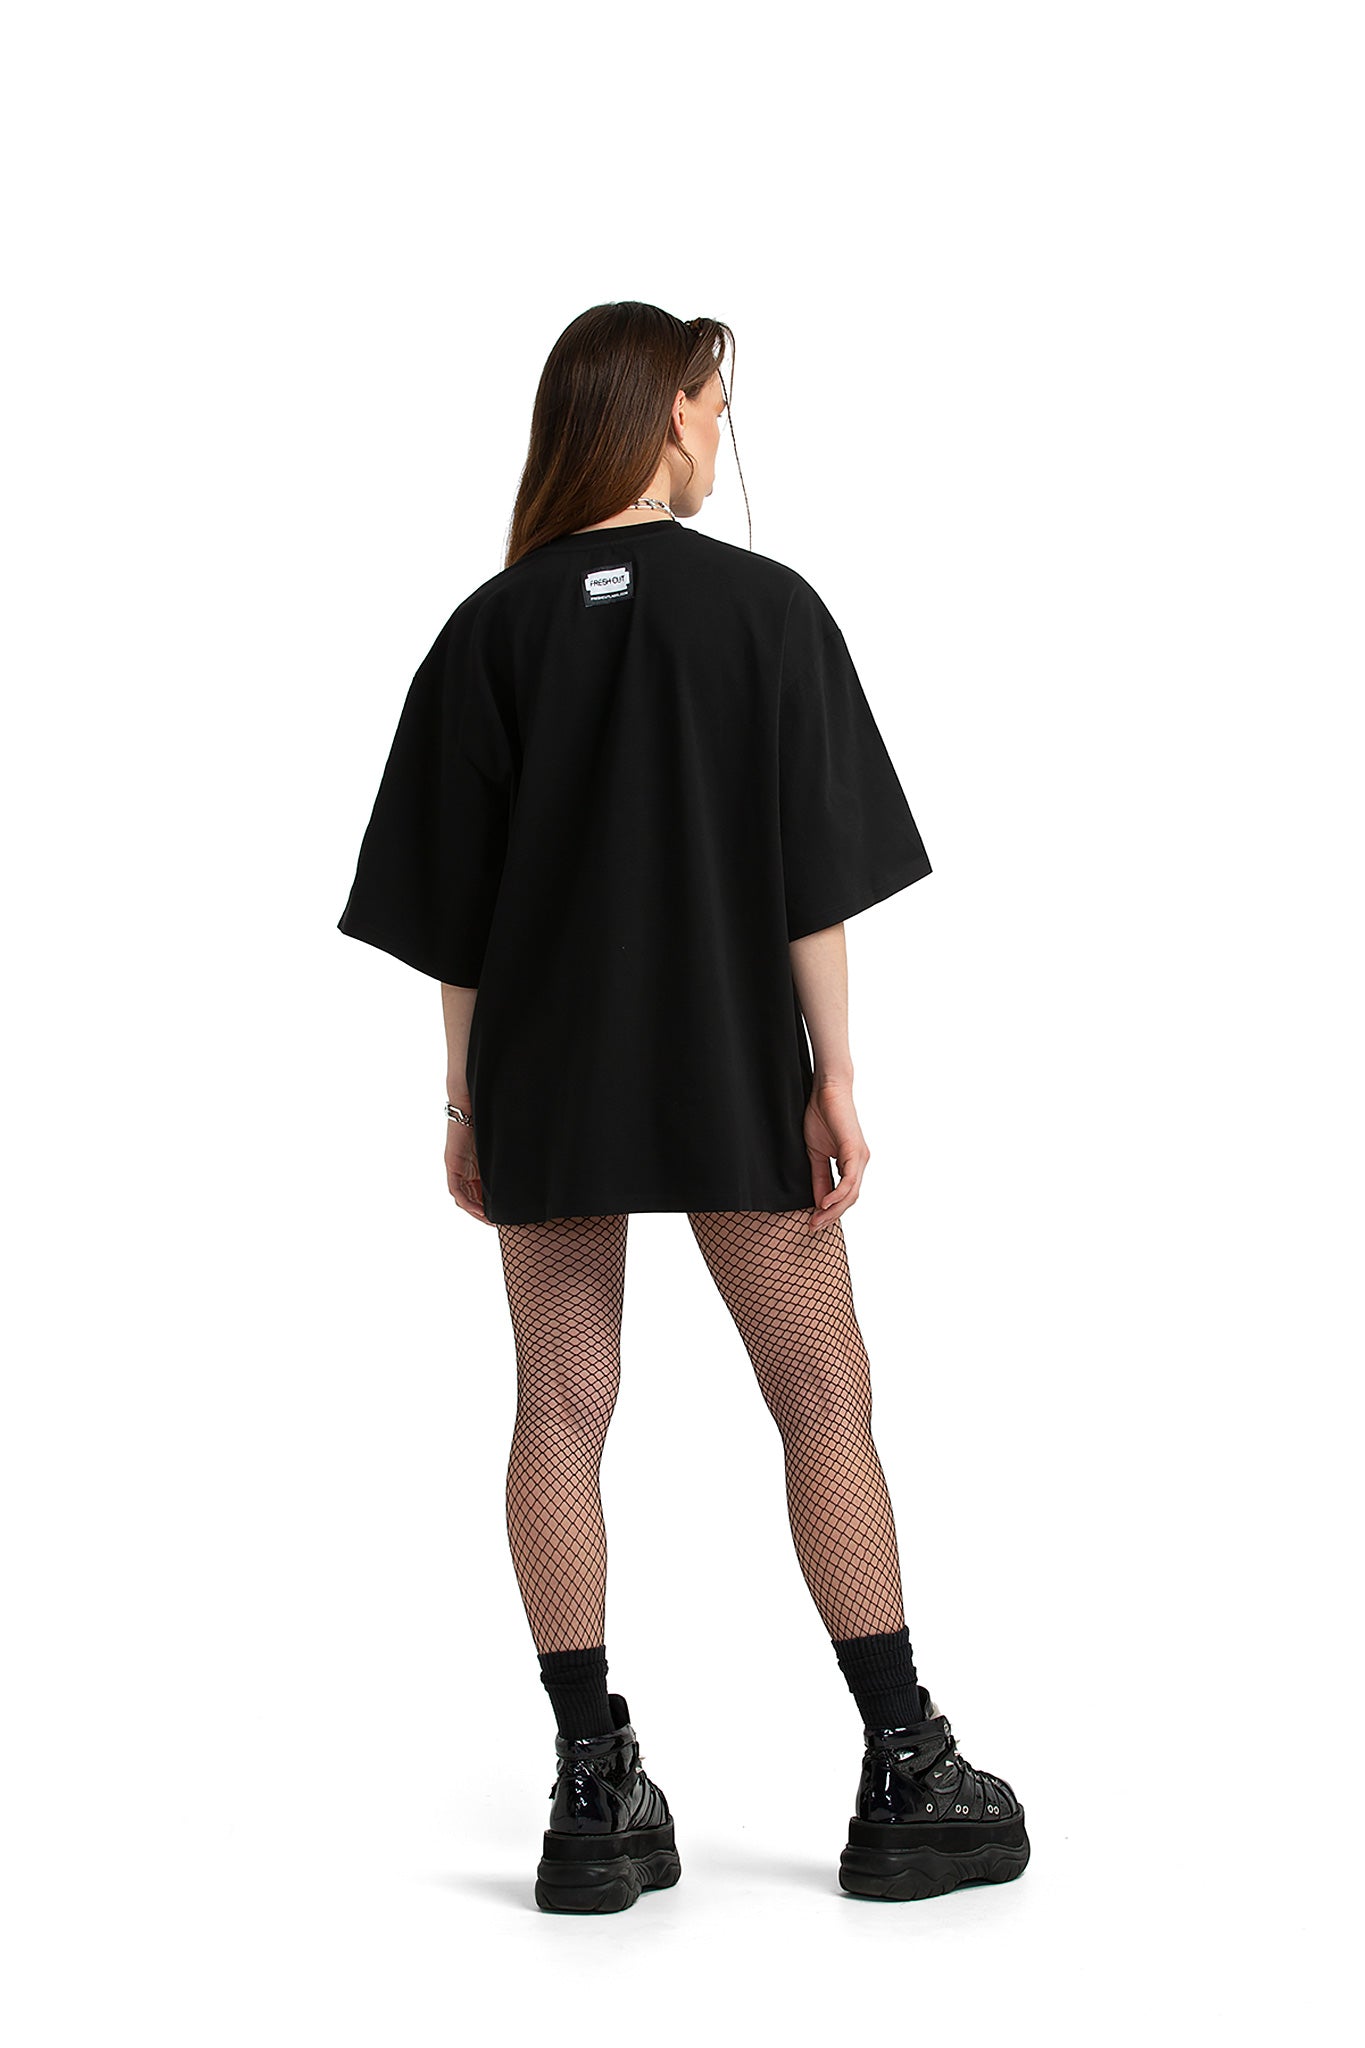 Techno Dragon übergroßes Unisex-T-Shirt [schwarz]